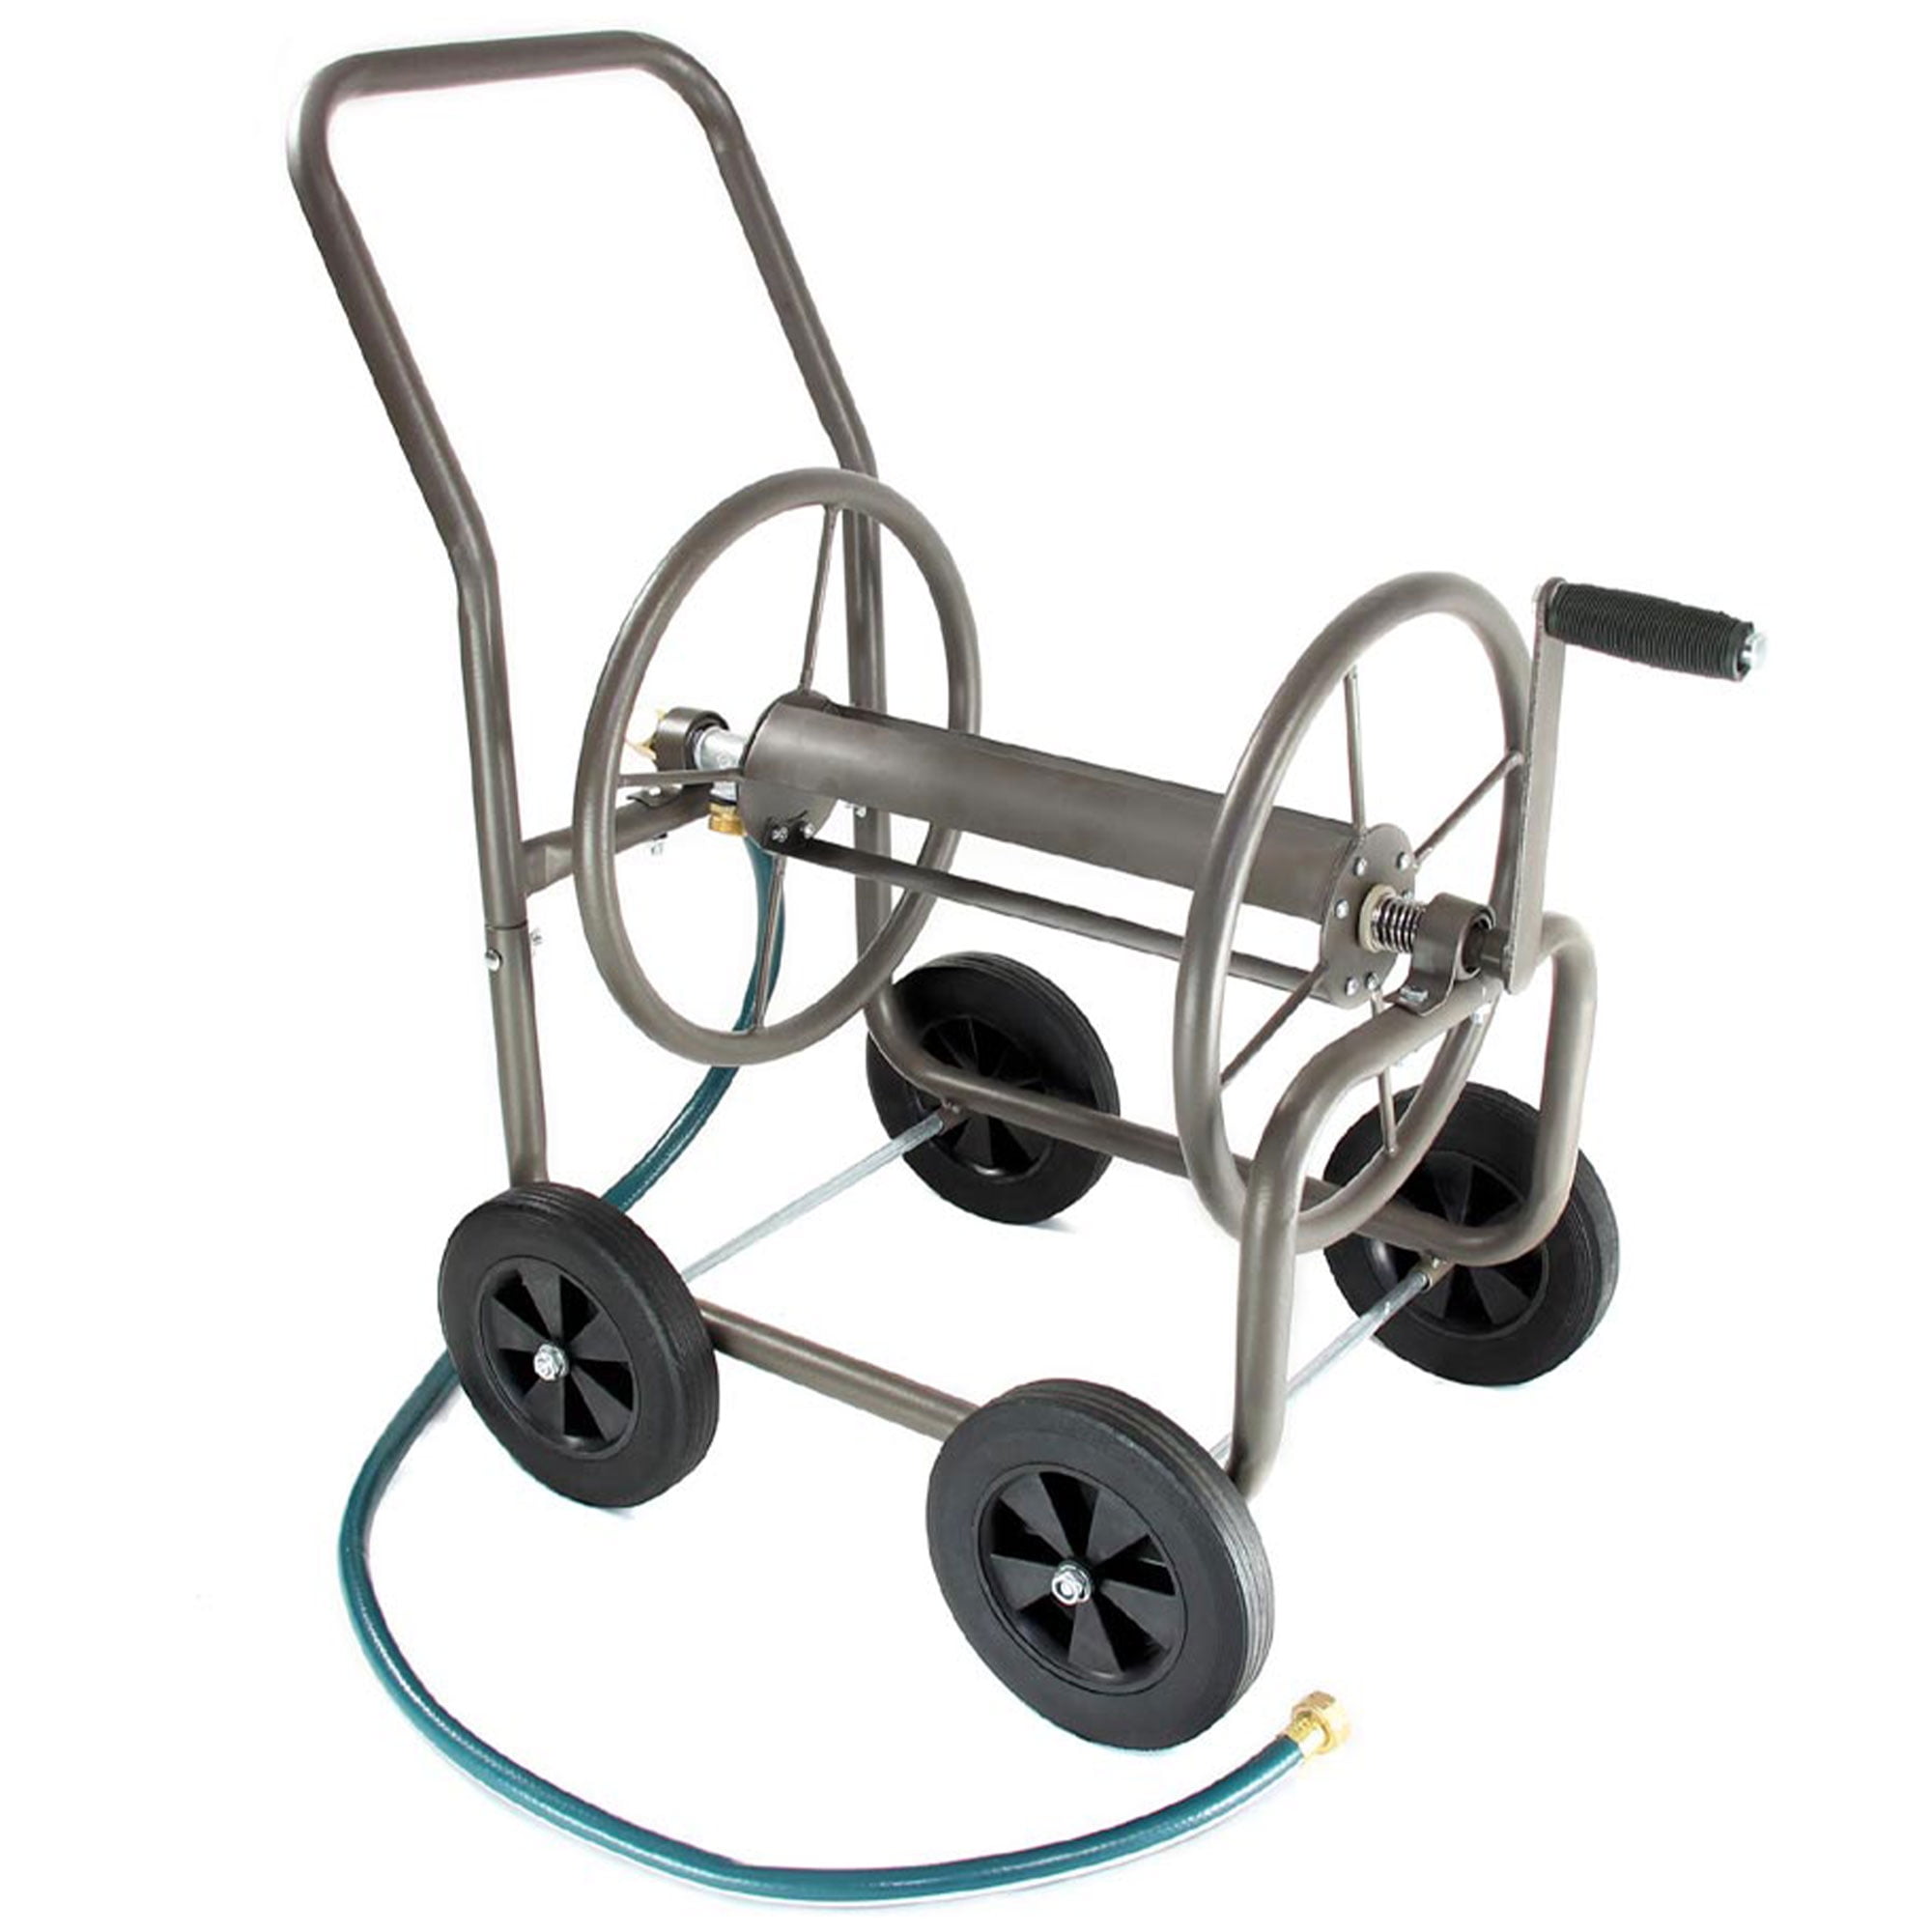 Tebru G1/2 Hose Reel Cart With Wheels Portable Garden Lawn Yard Water Pipe  Winder Organizer For 35m Hose,Garden Accessory,Garden Hose Cart 